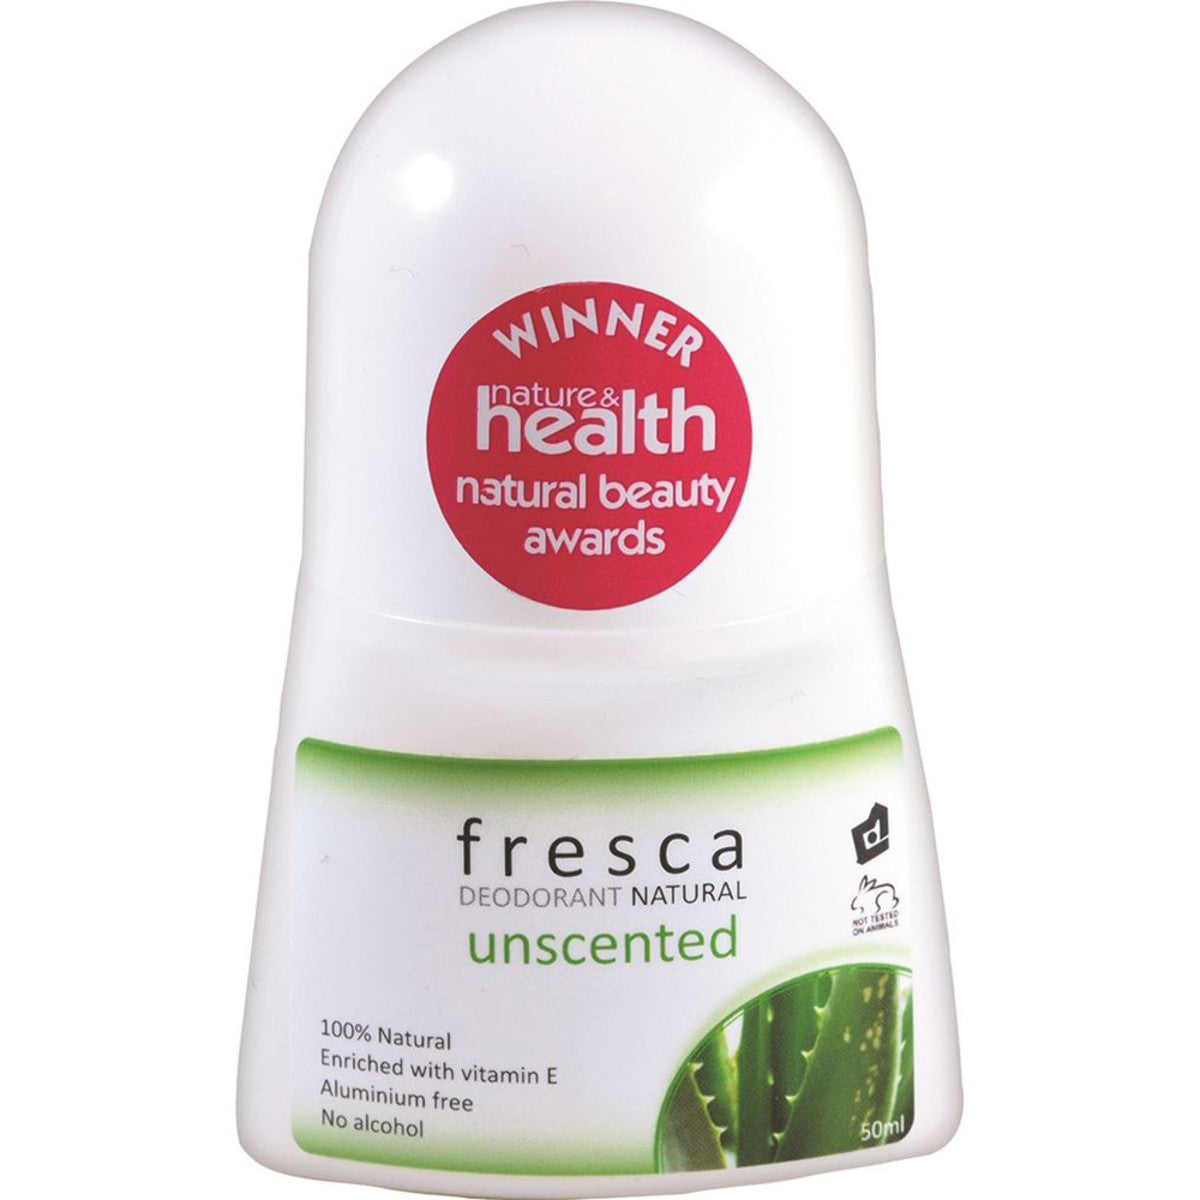 Fresca Natural - Deodorant Unscented